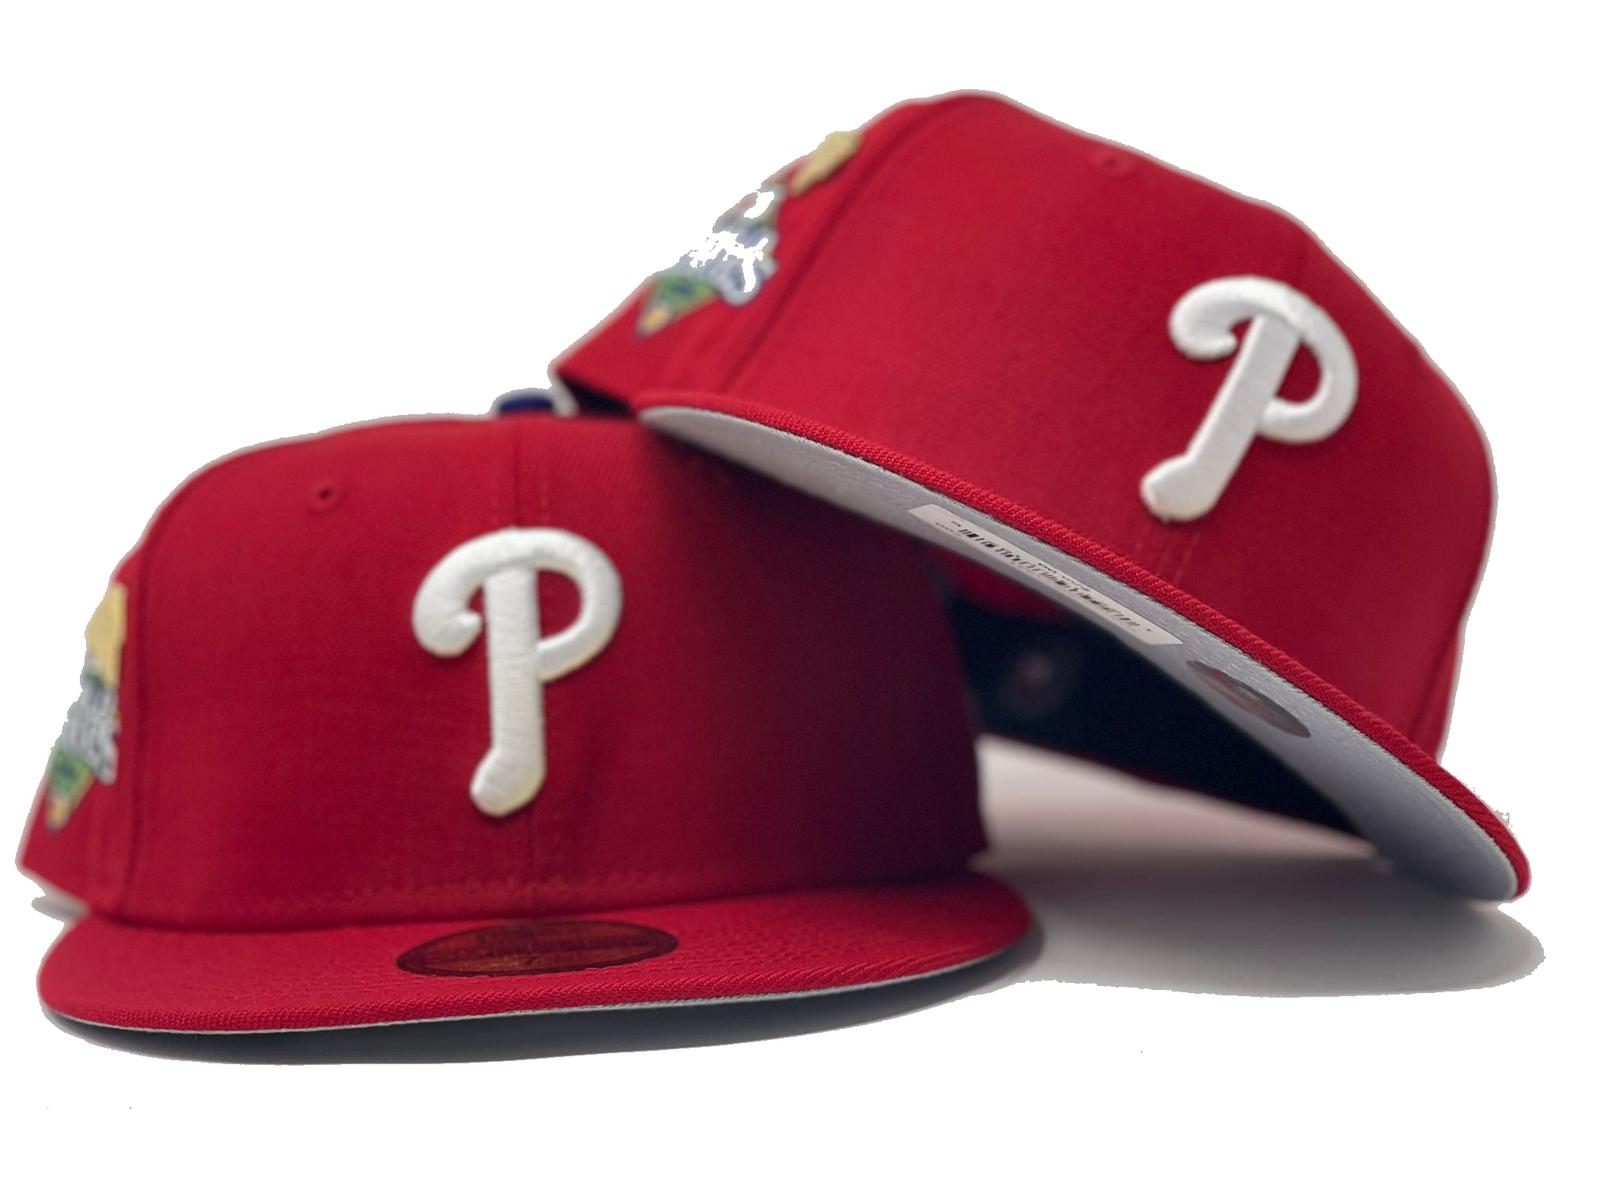 2008 Philadelphia Phillies National League Champions World Series Hat